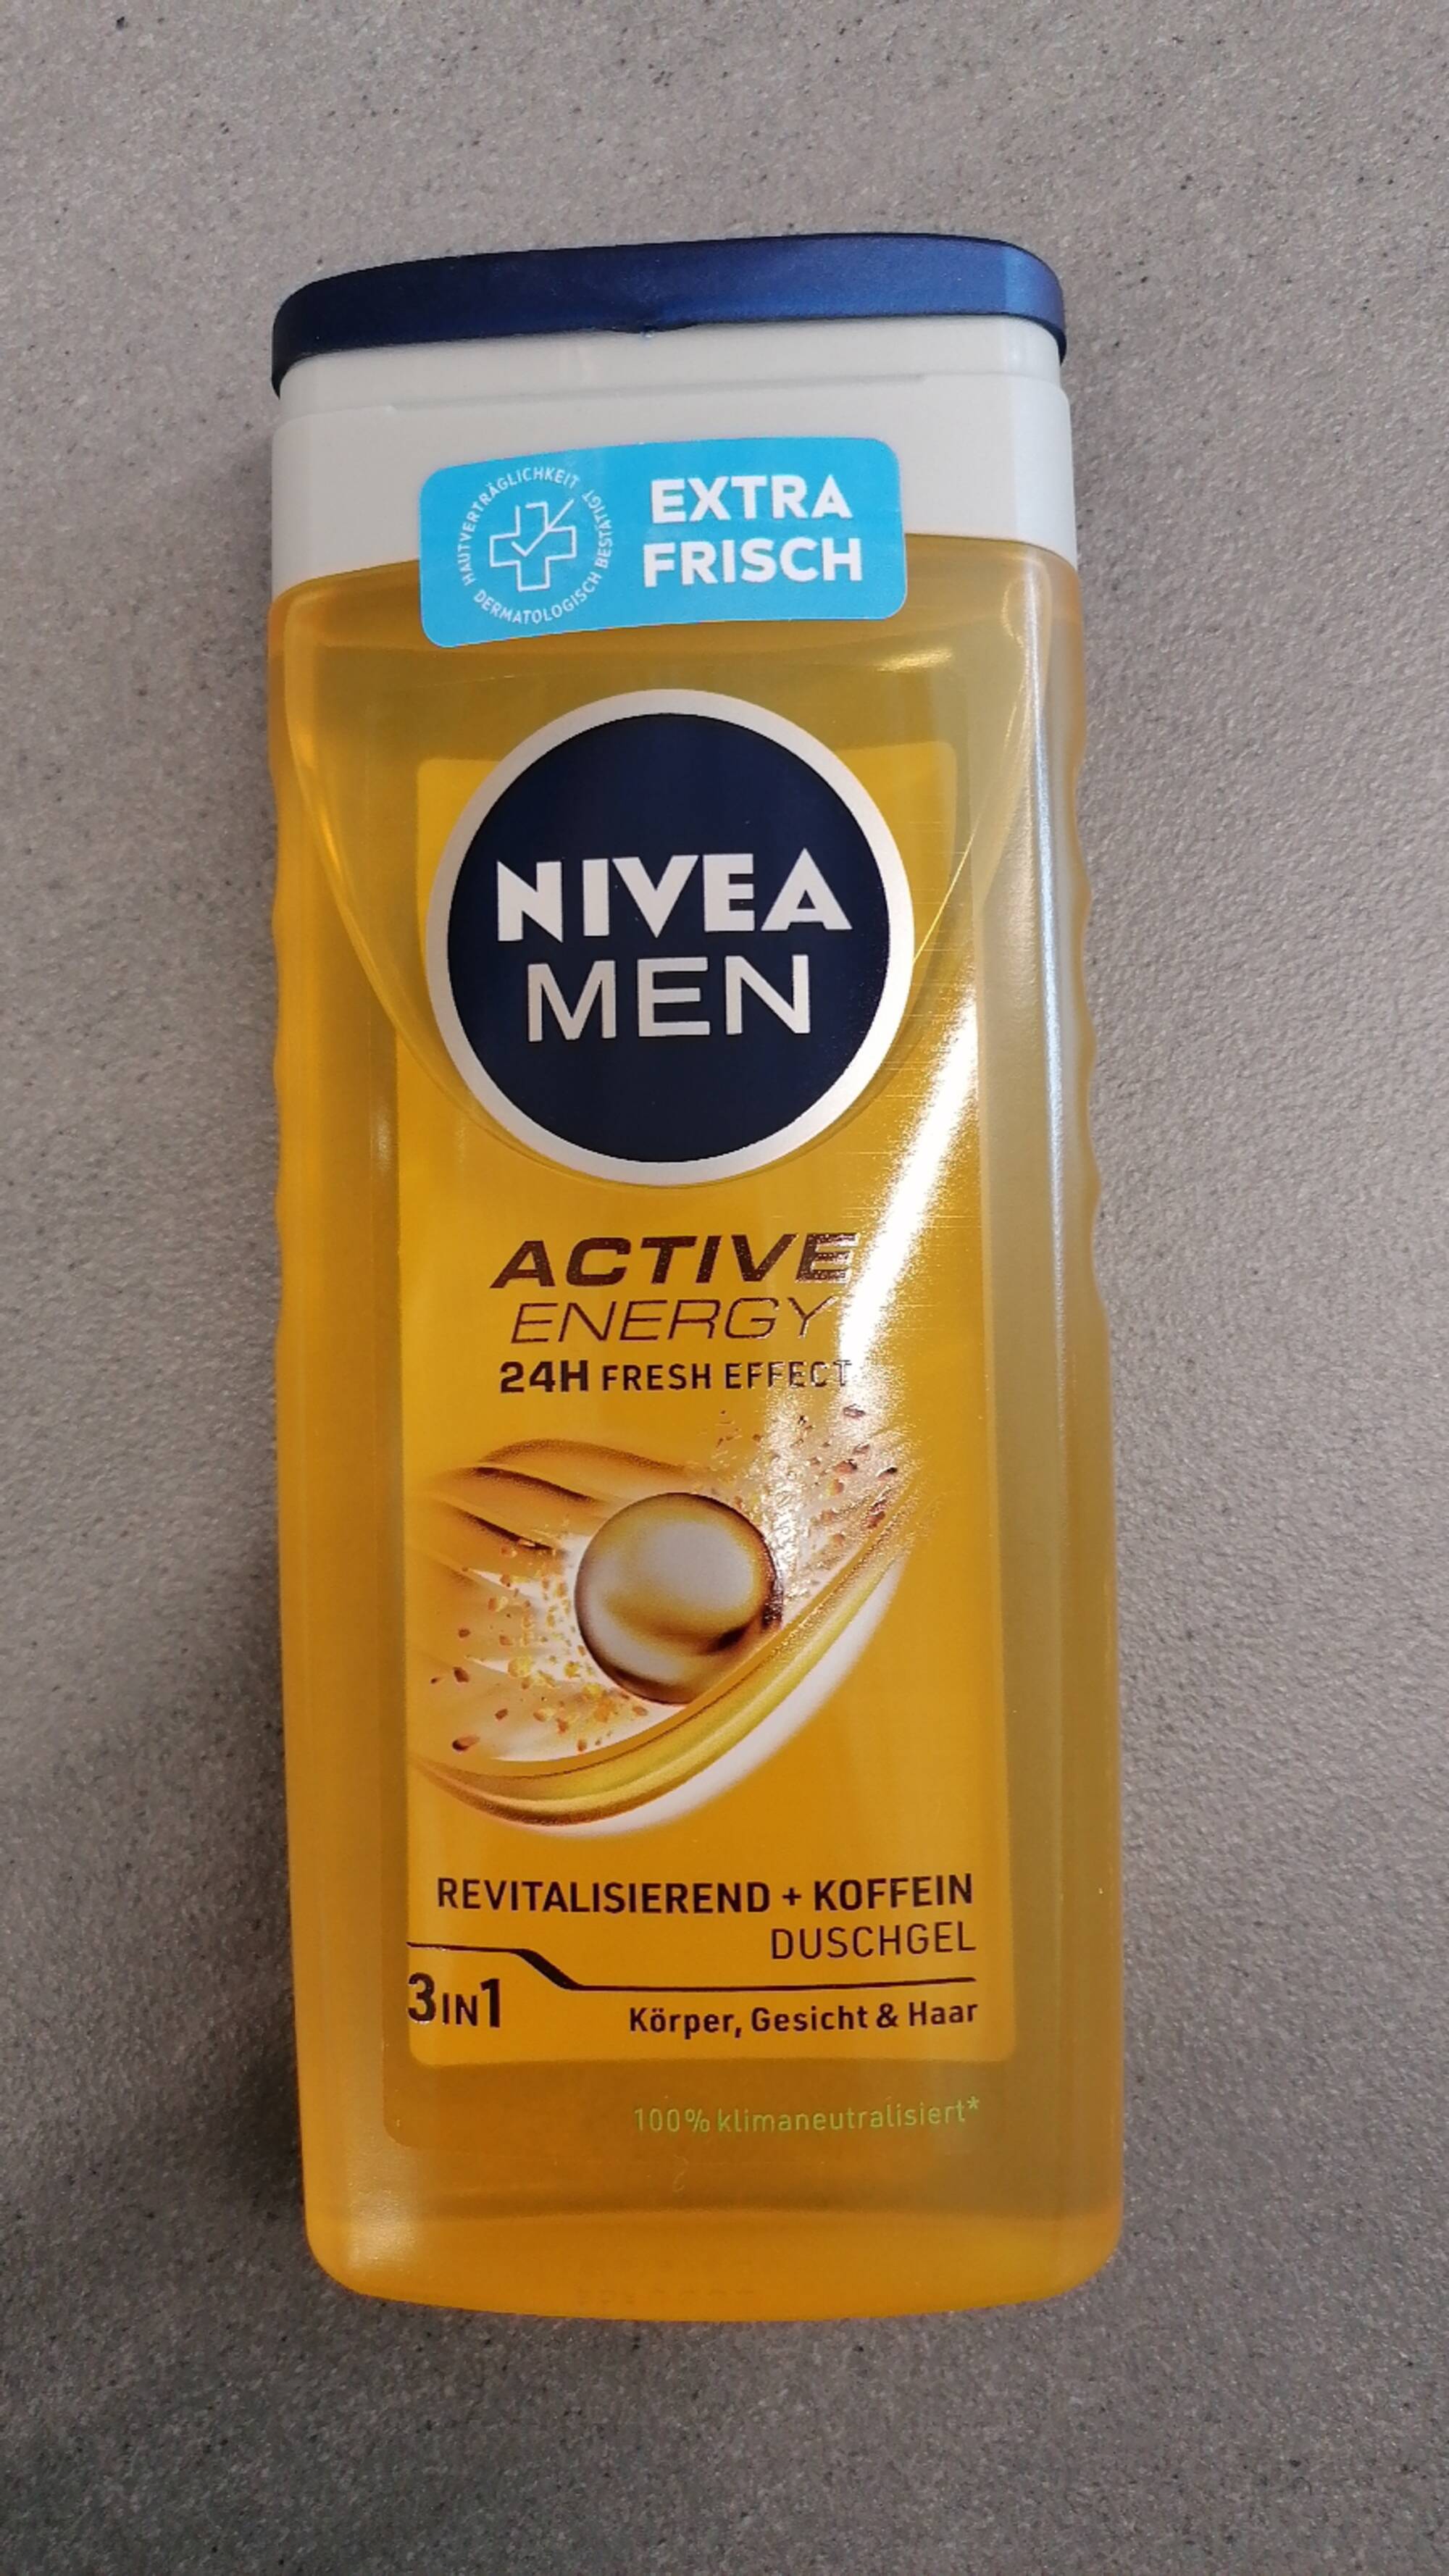 NIVEA MEN - Active energy 